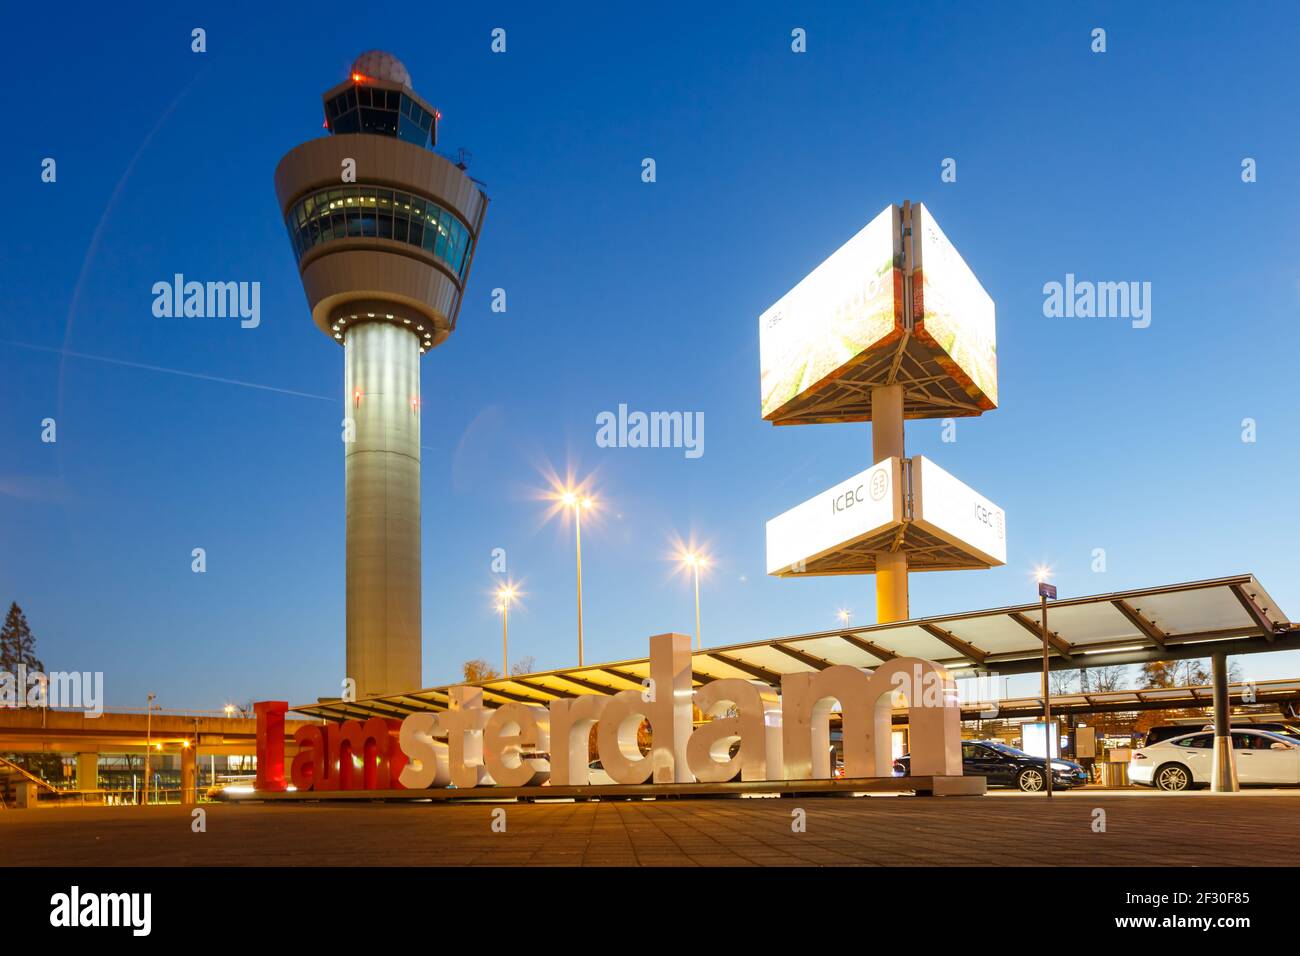 Amsterdam, Niederlande - 22. November 2017: Turm am Flughafen Amsterdam Schiphol (AMS) in den Niederlanden. Stockfoto